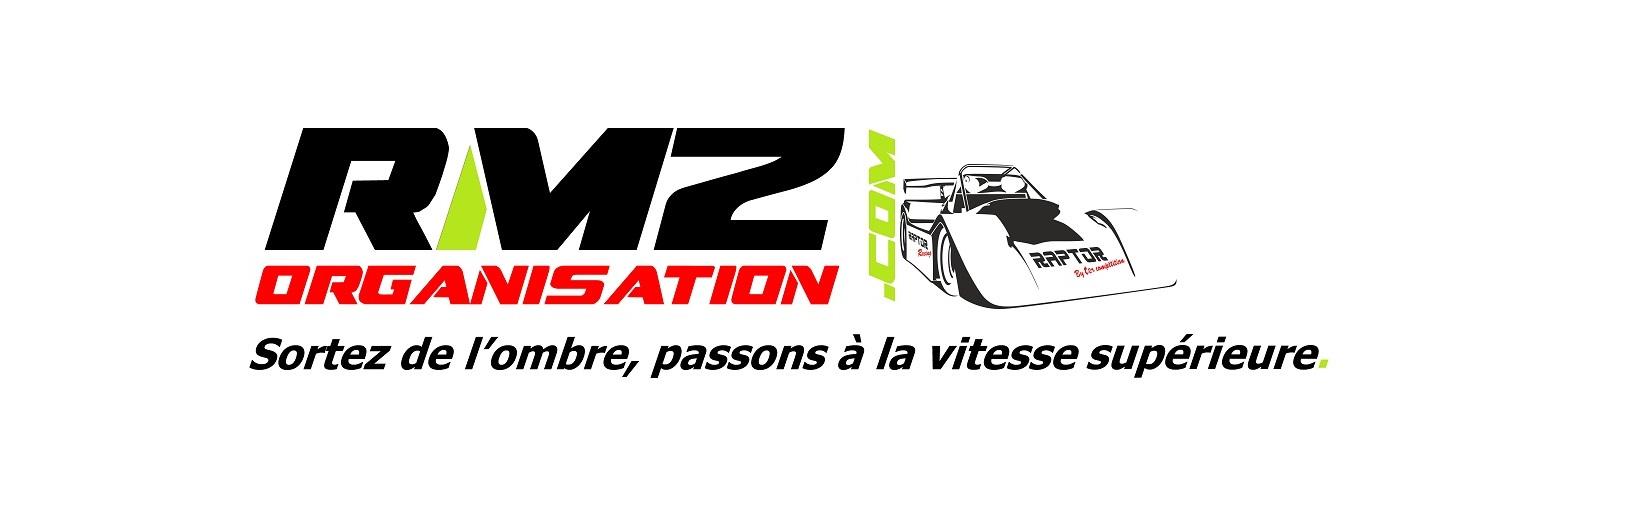 Logo rmz organisation pm 3